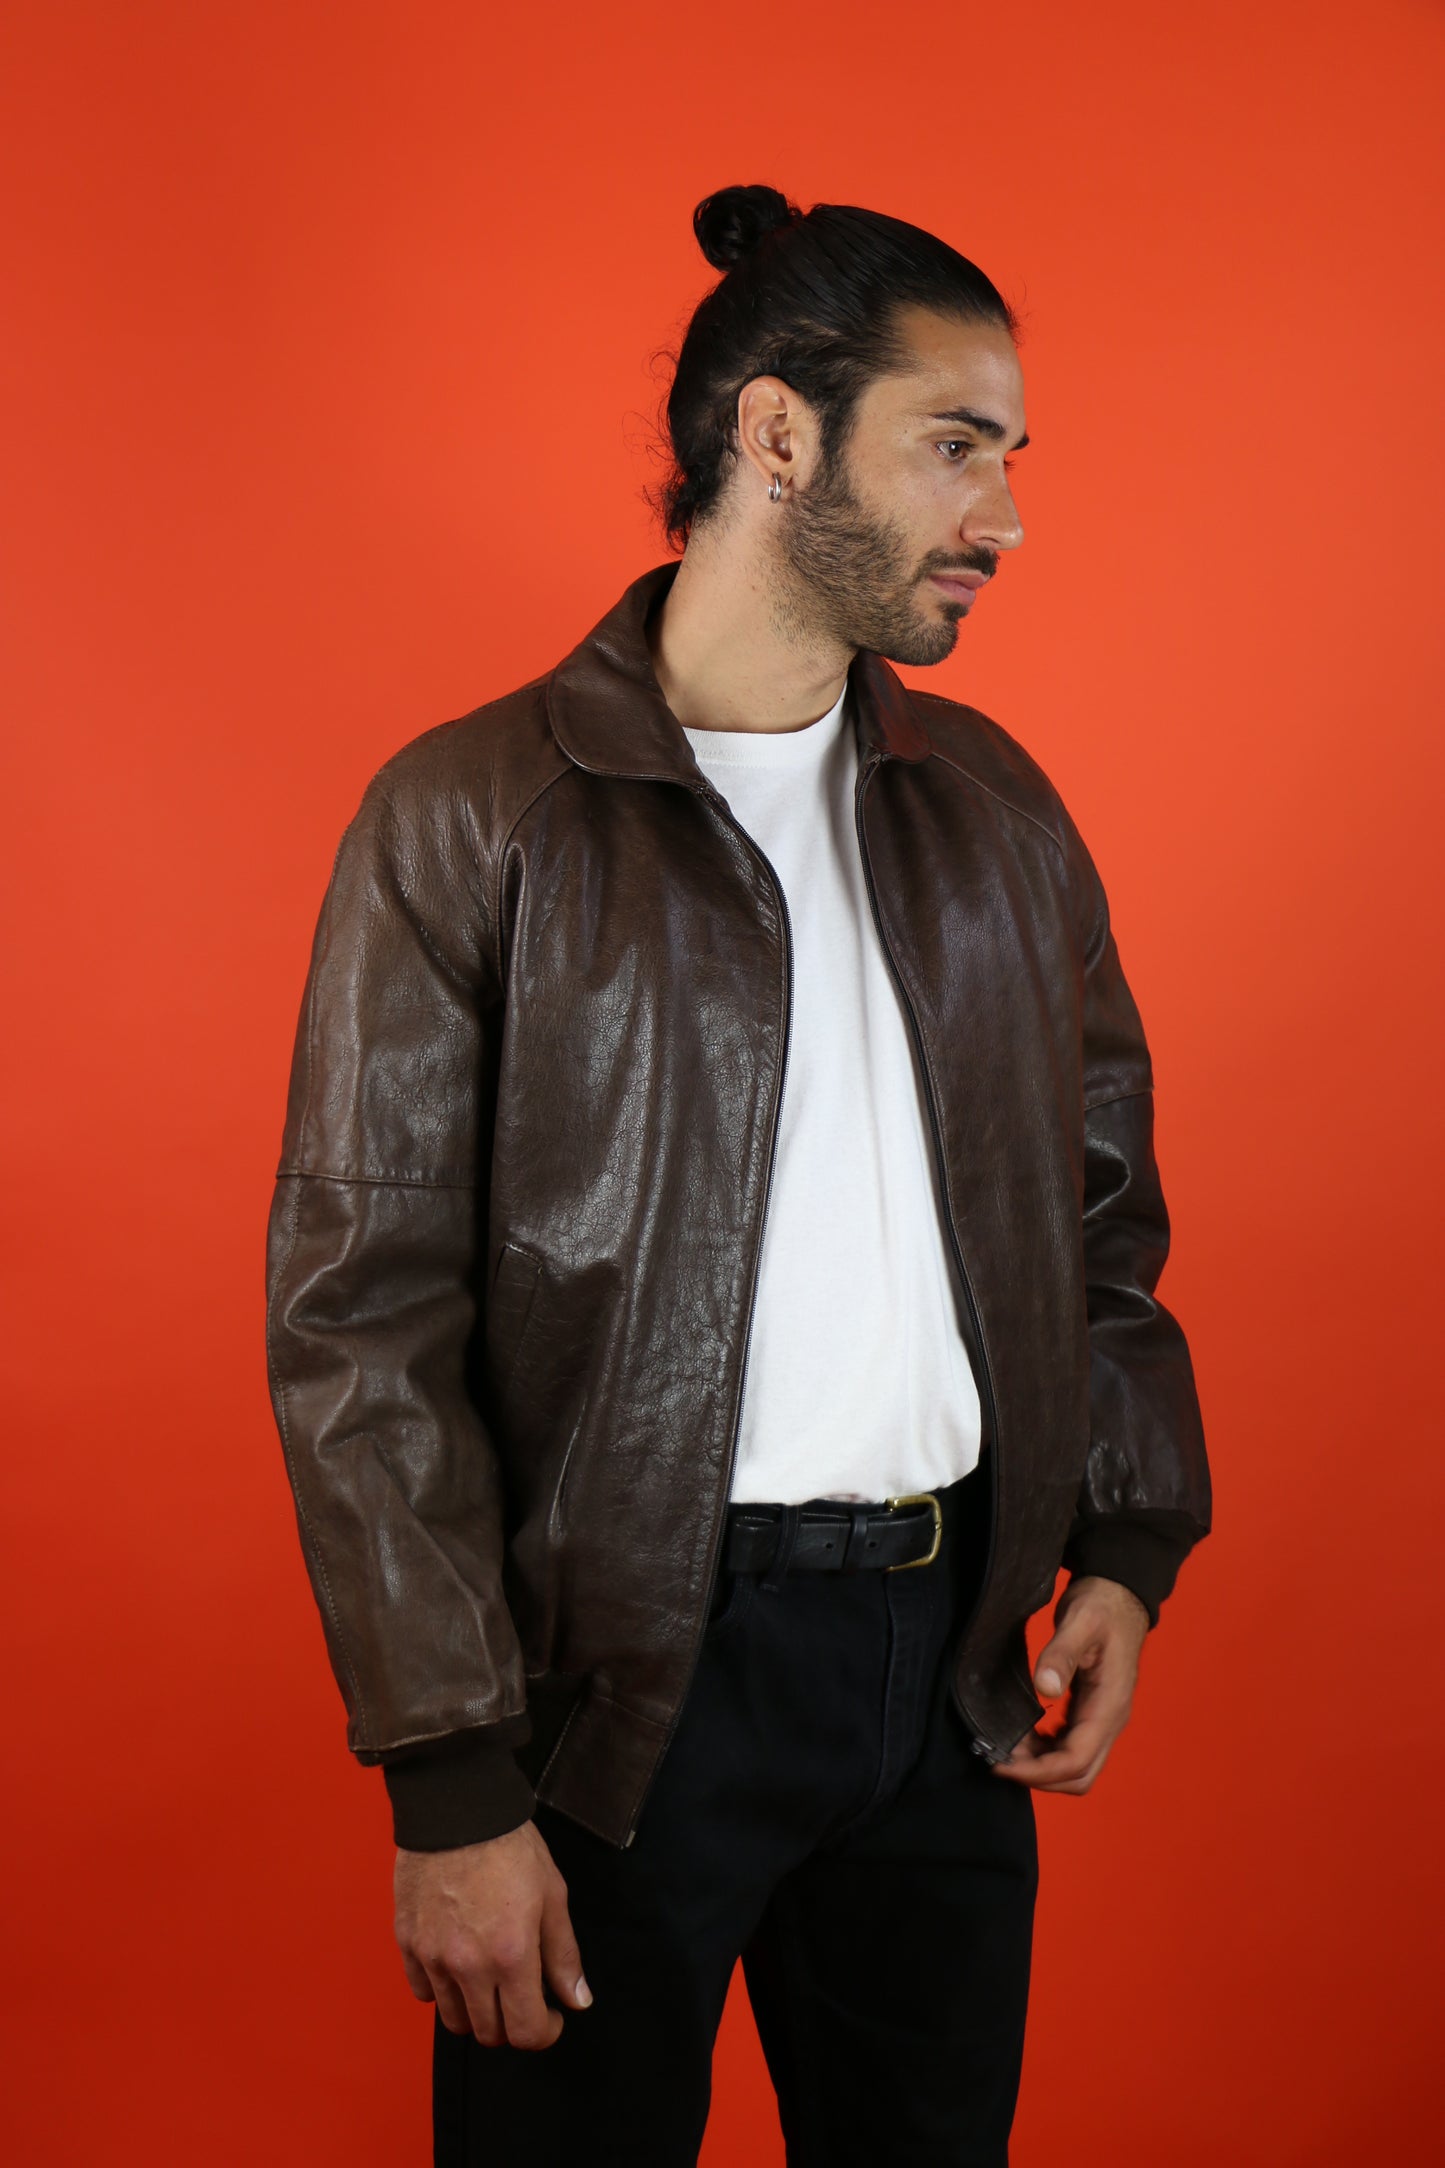 Leather Jacket w/ warm lining - vintage clothing clochard92.com